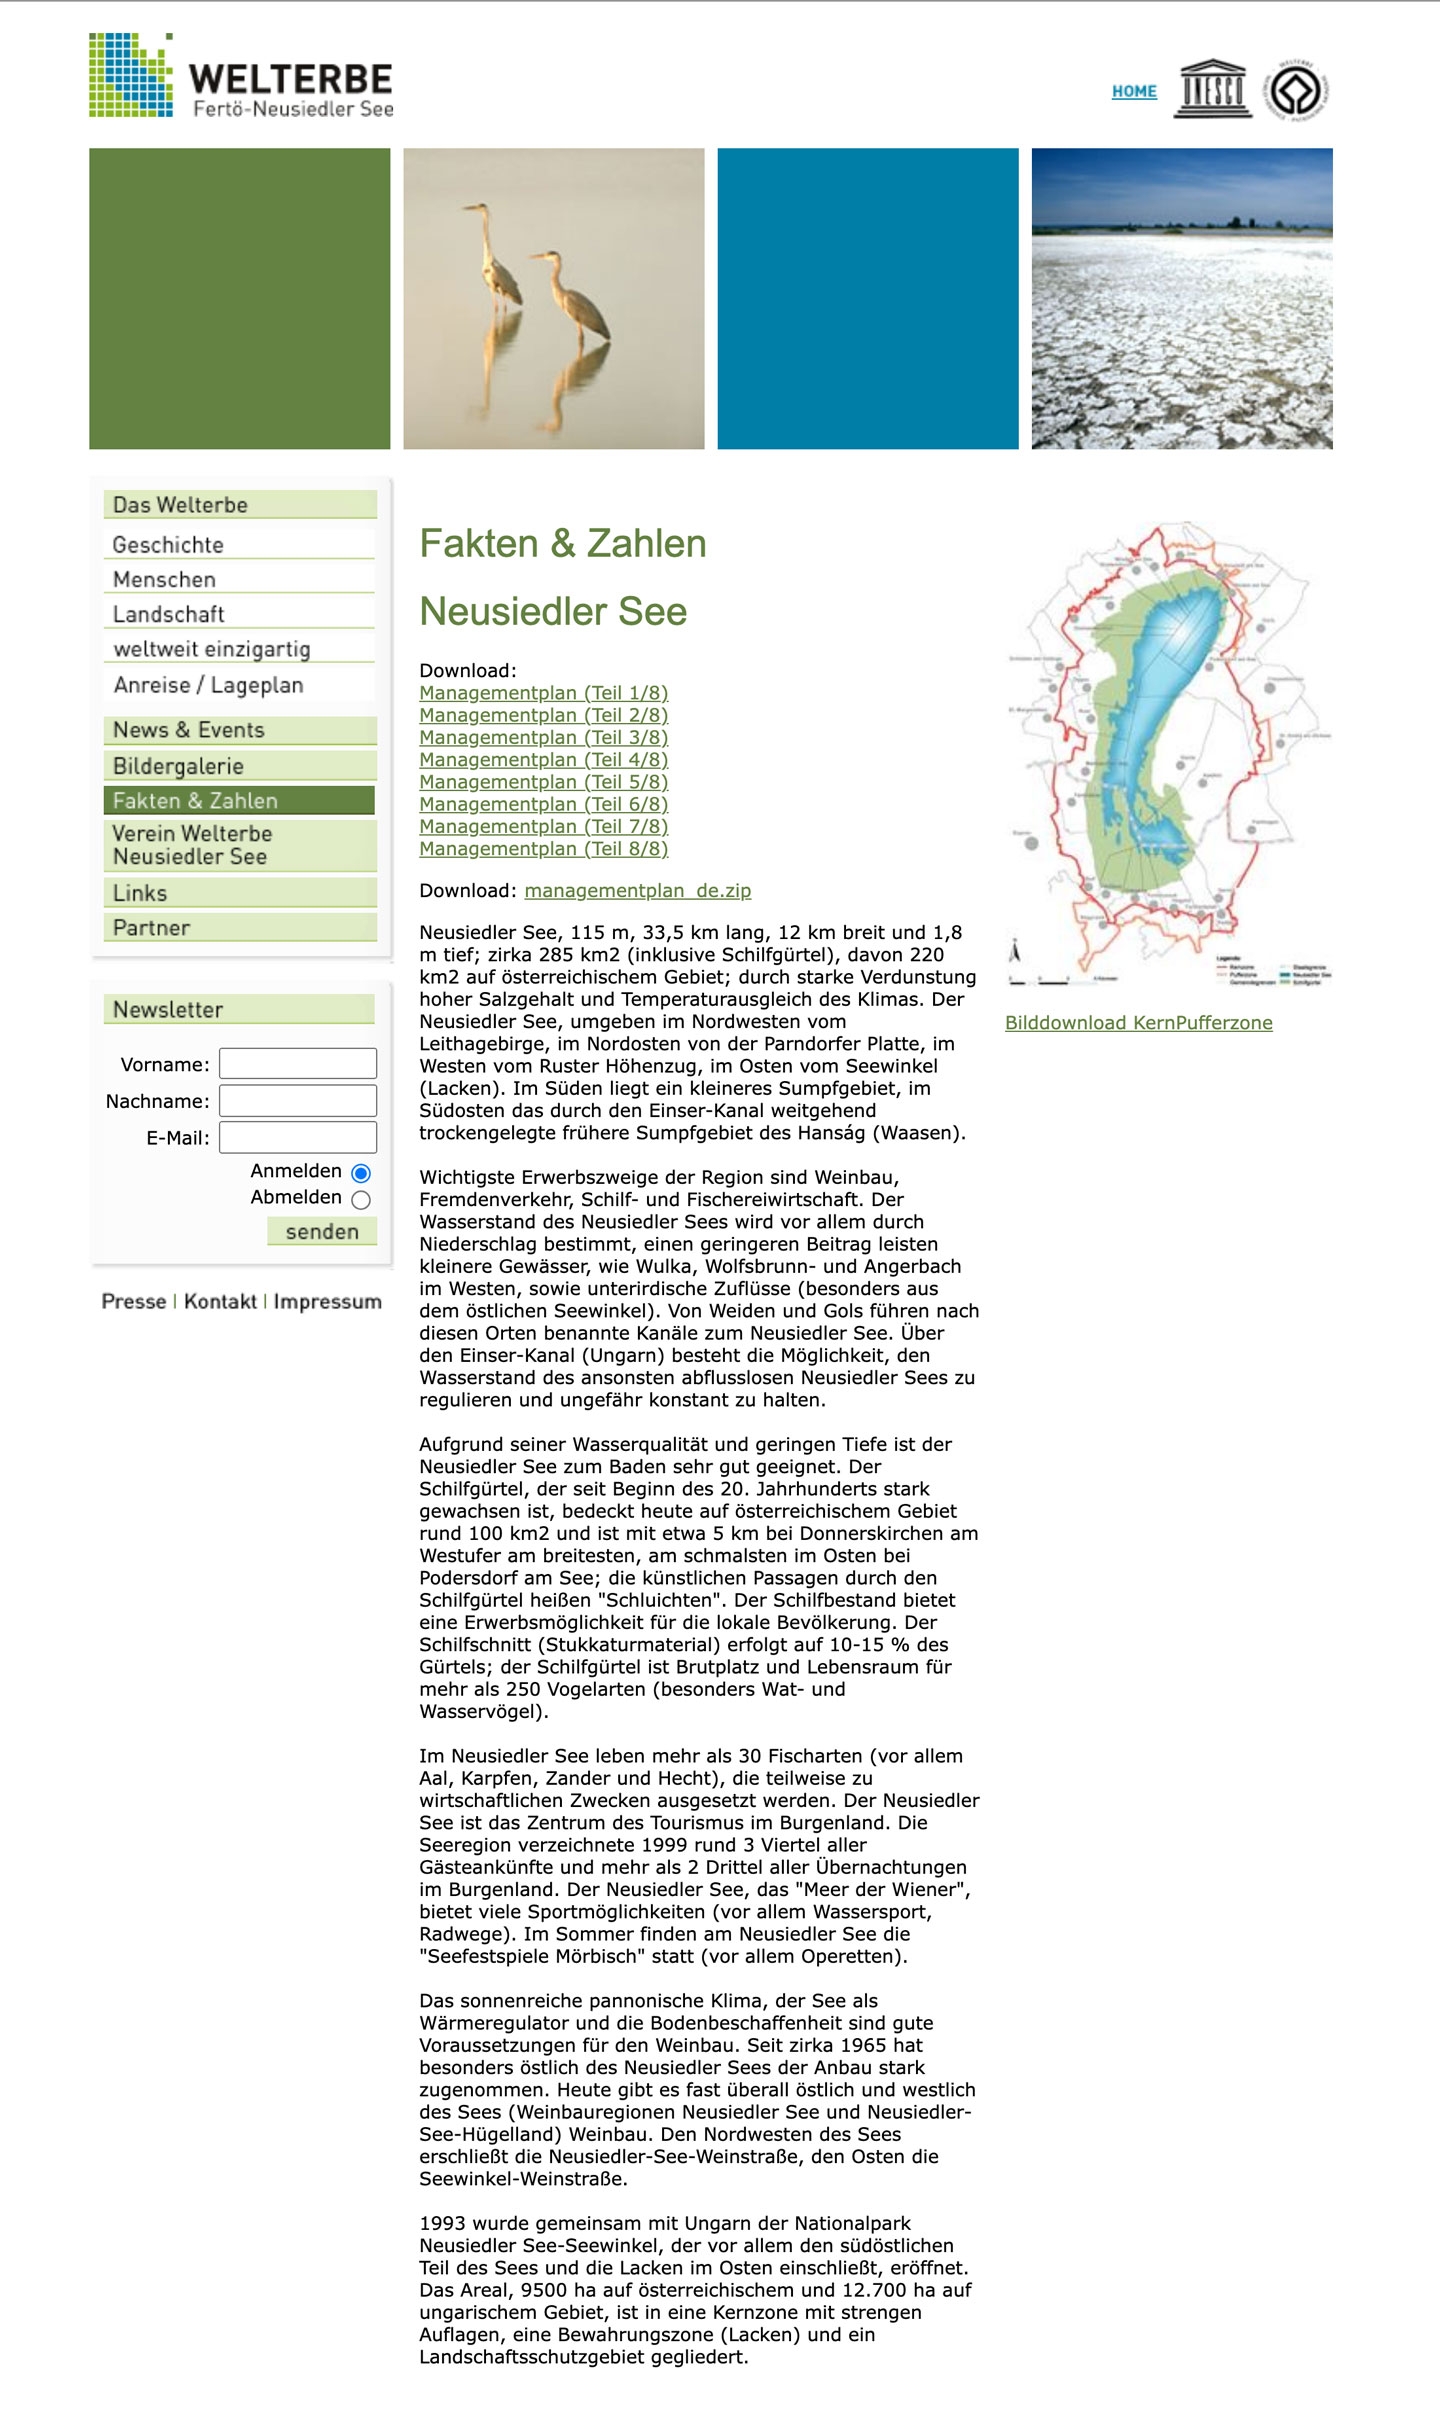 Welterbe Neusiedler See | welterbe.org | 2005 (Screen Full Scroll) © echonet communication / Auftraggeber